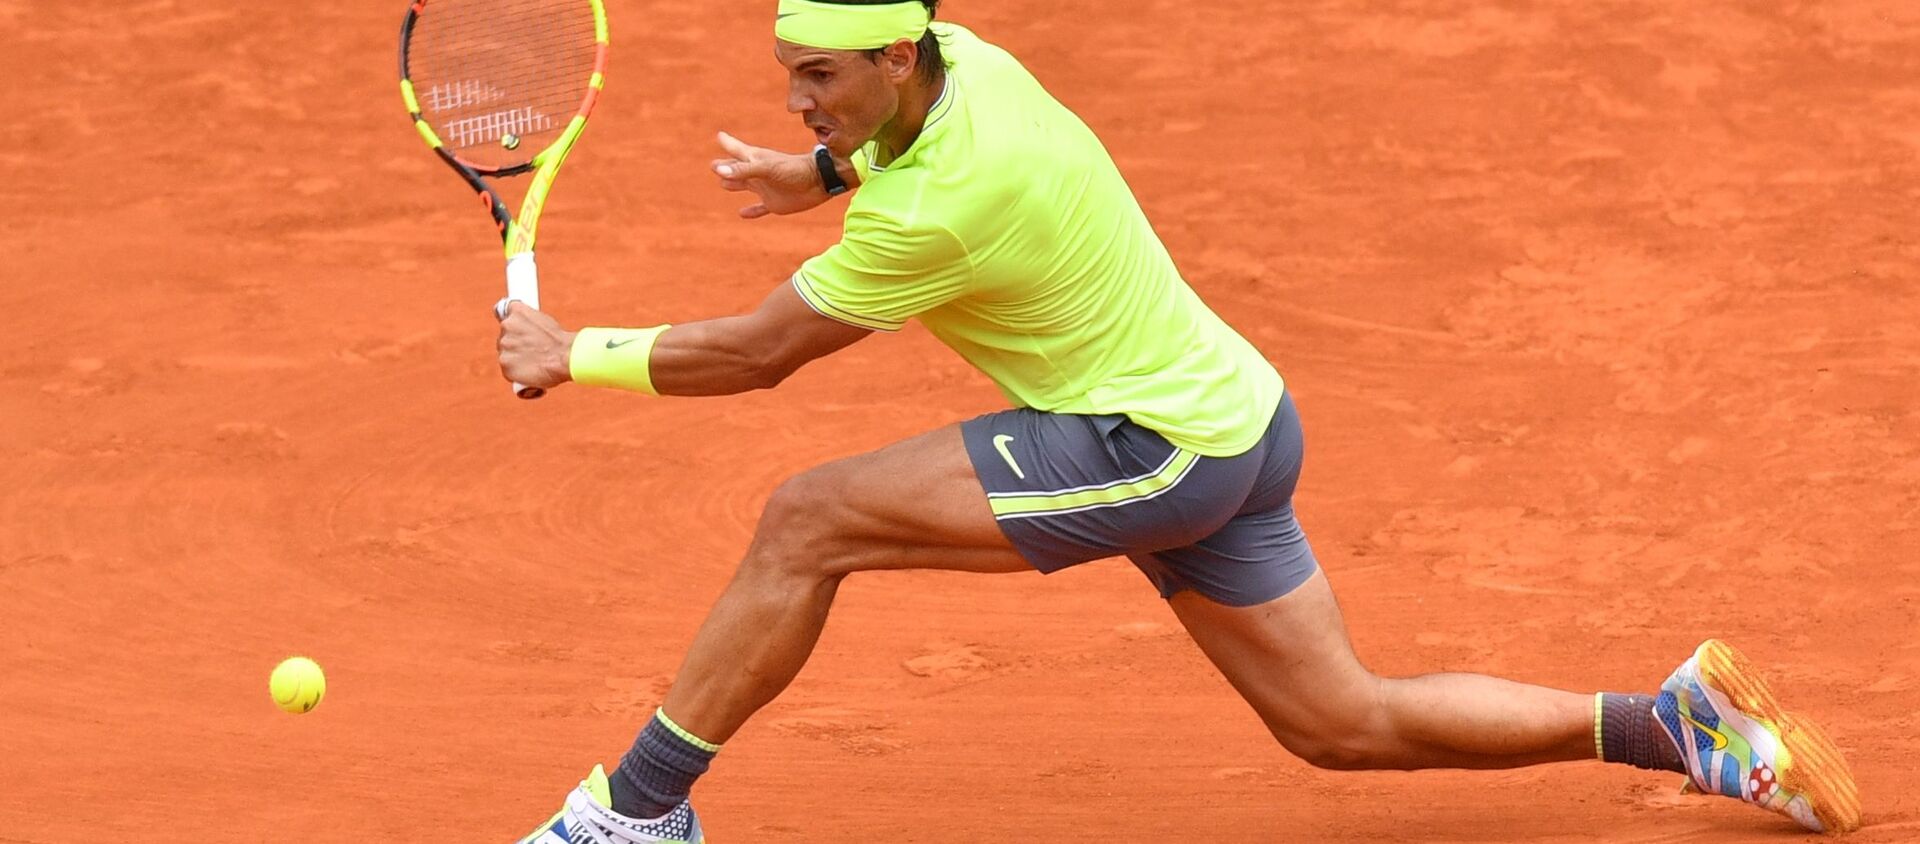 Spanish Tennis Player Rafael Nadal Wins His 12th French Open Title - Sputnik International, 1920, 12.05.2021